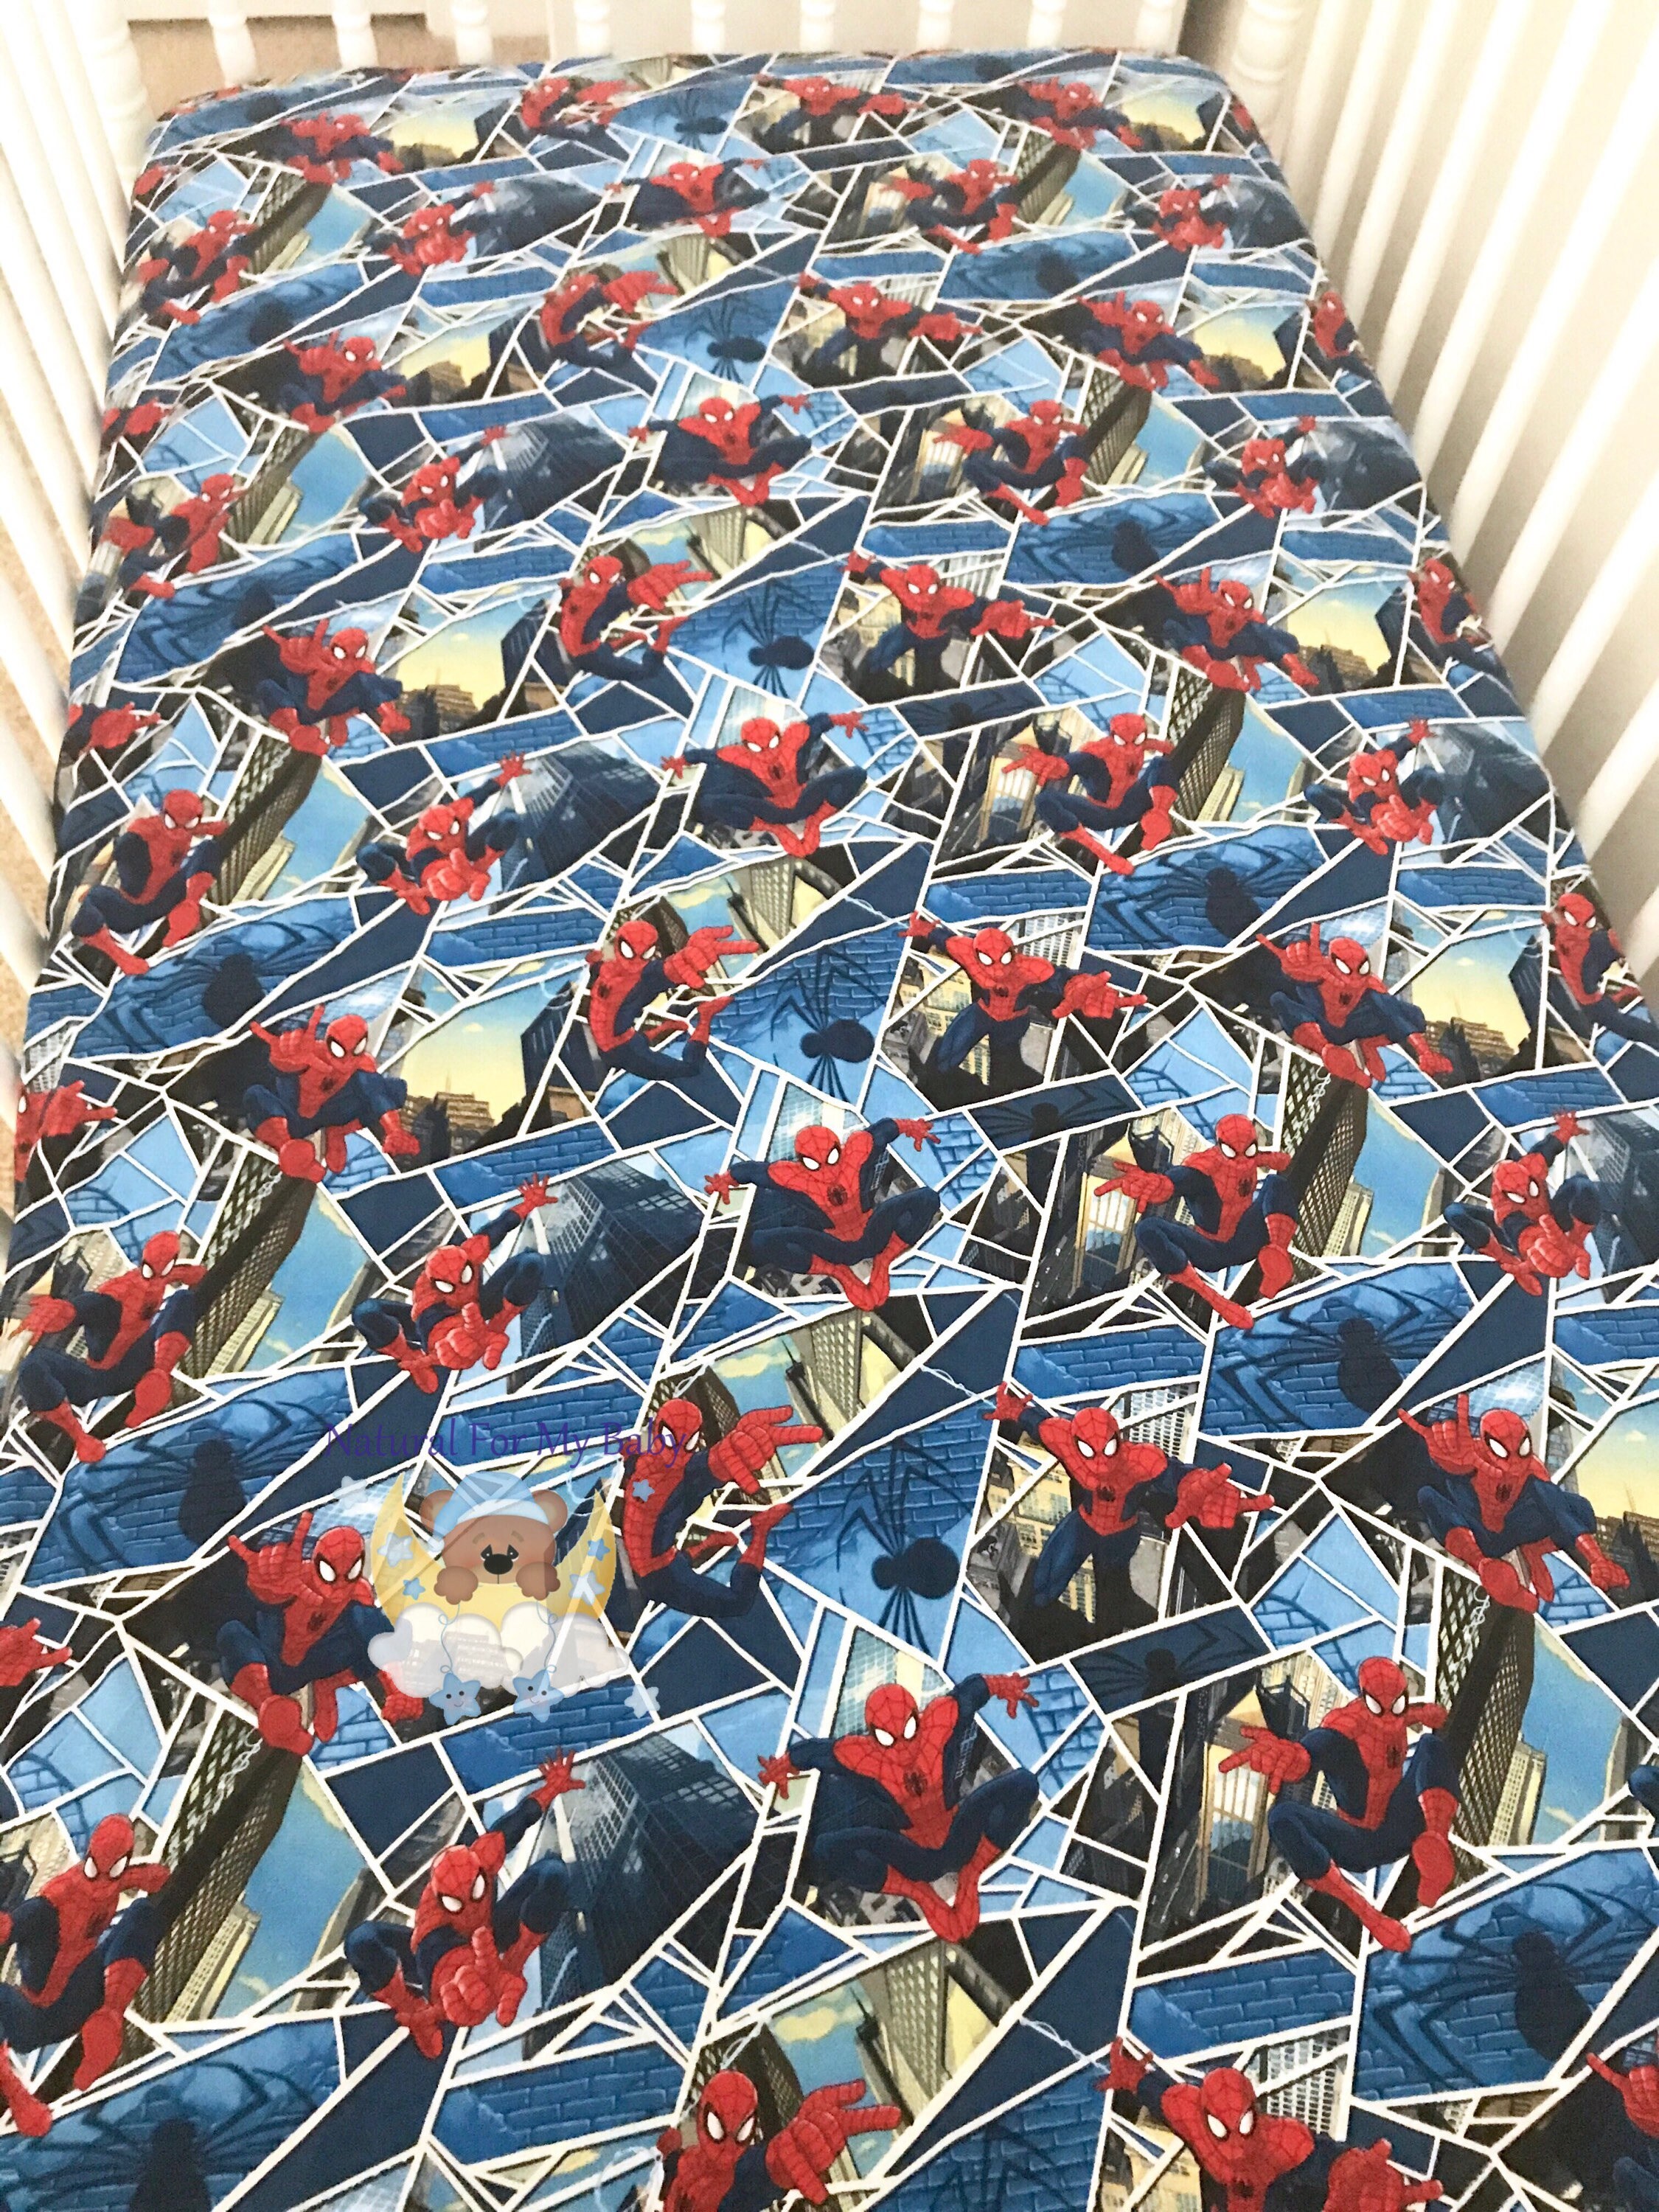 spiderman crib sheets